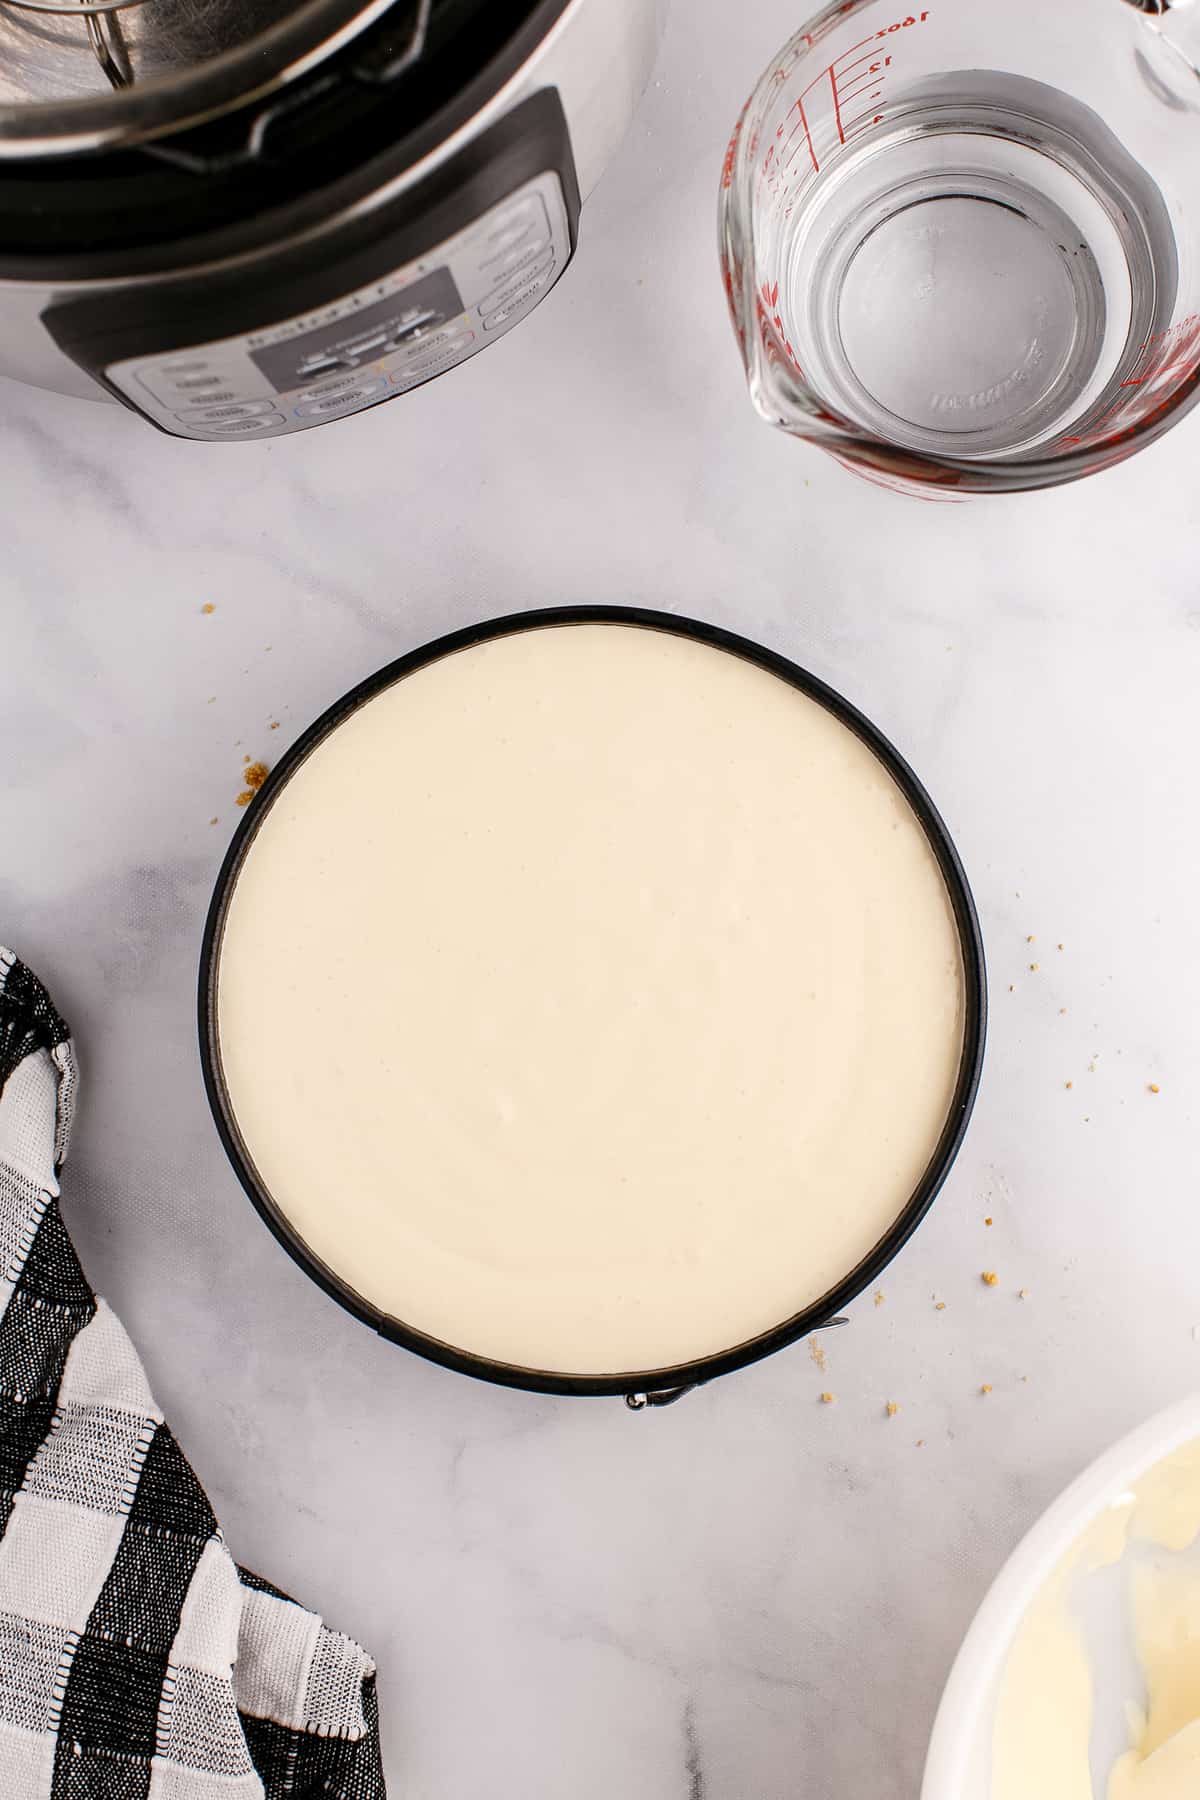 Cheesecake filling in springform pan